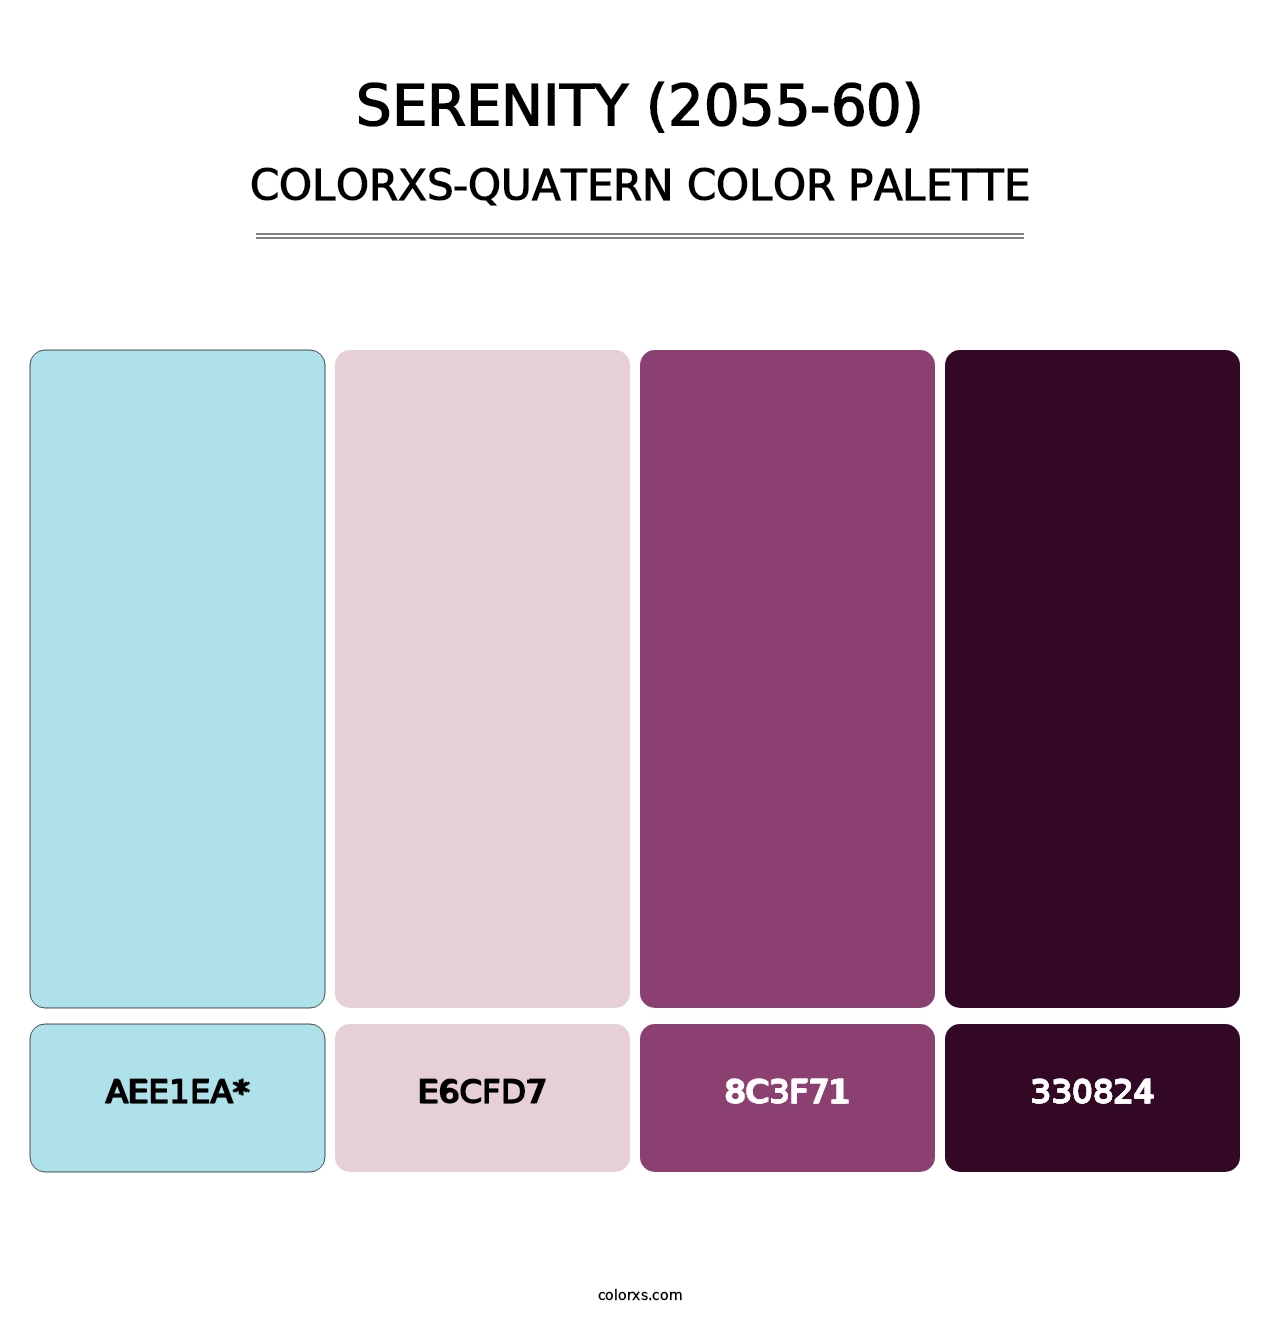 Serenity (2055-60) - Colorxs Quad Palette